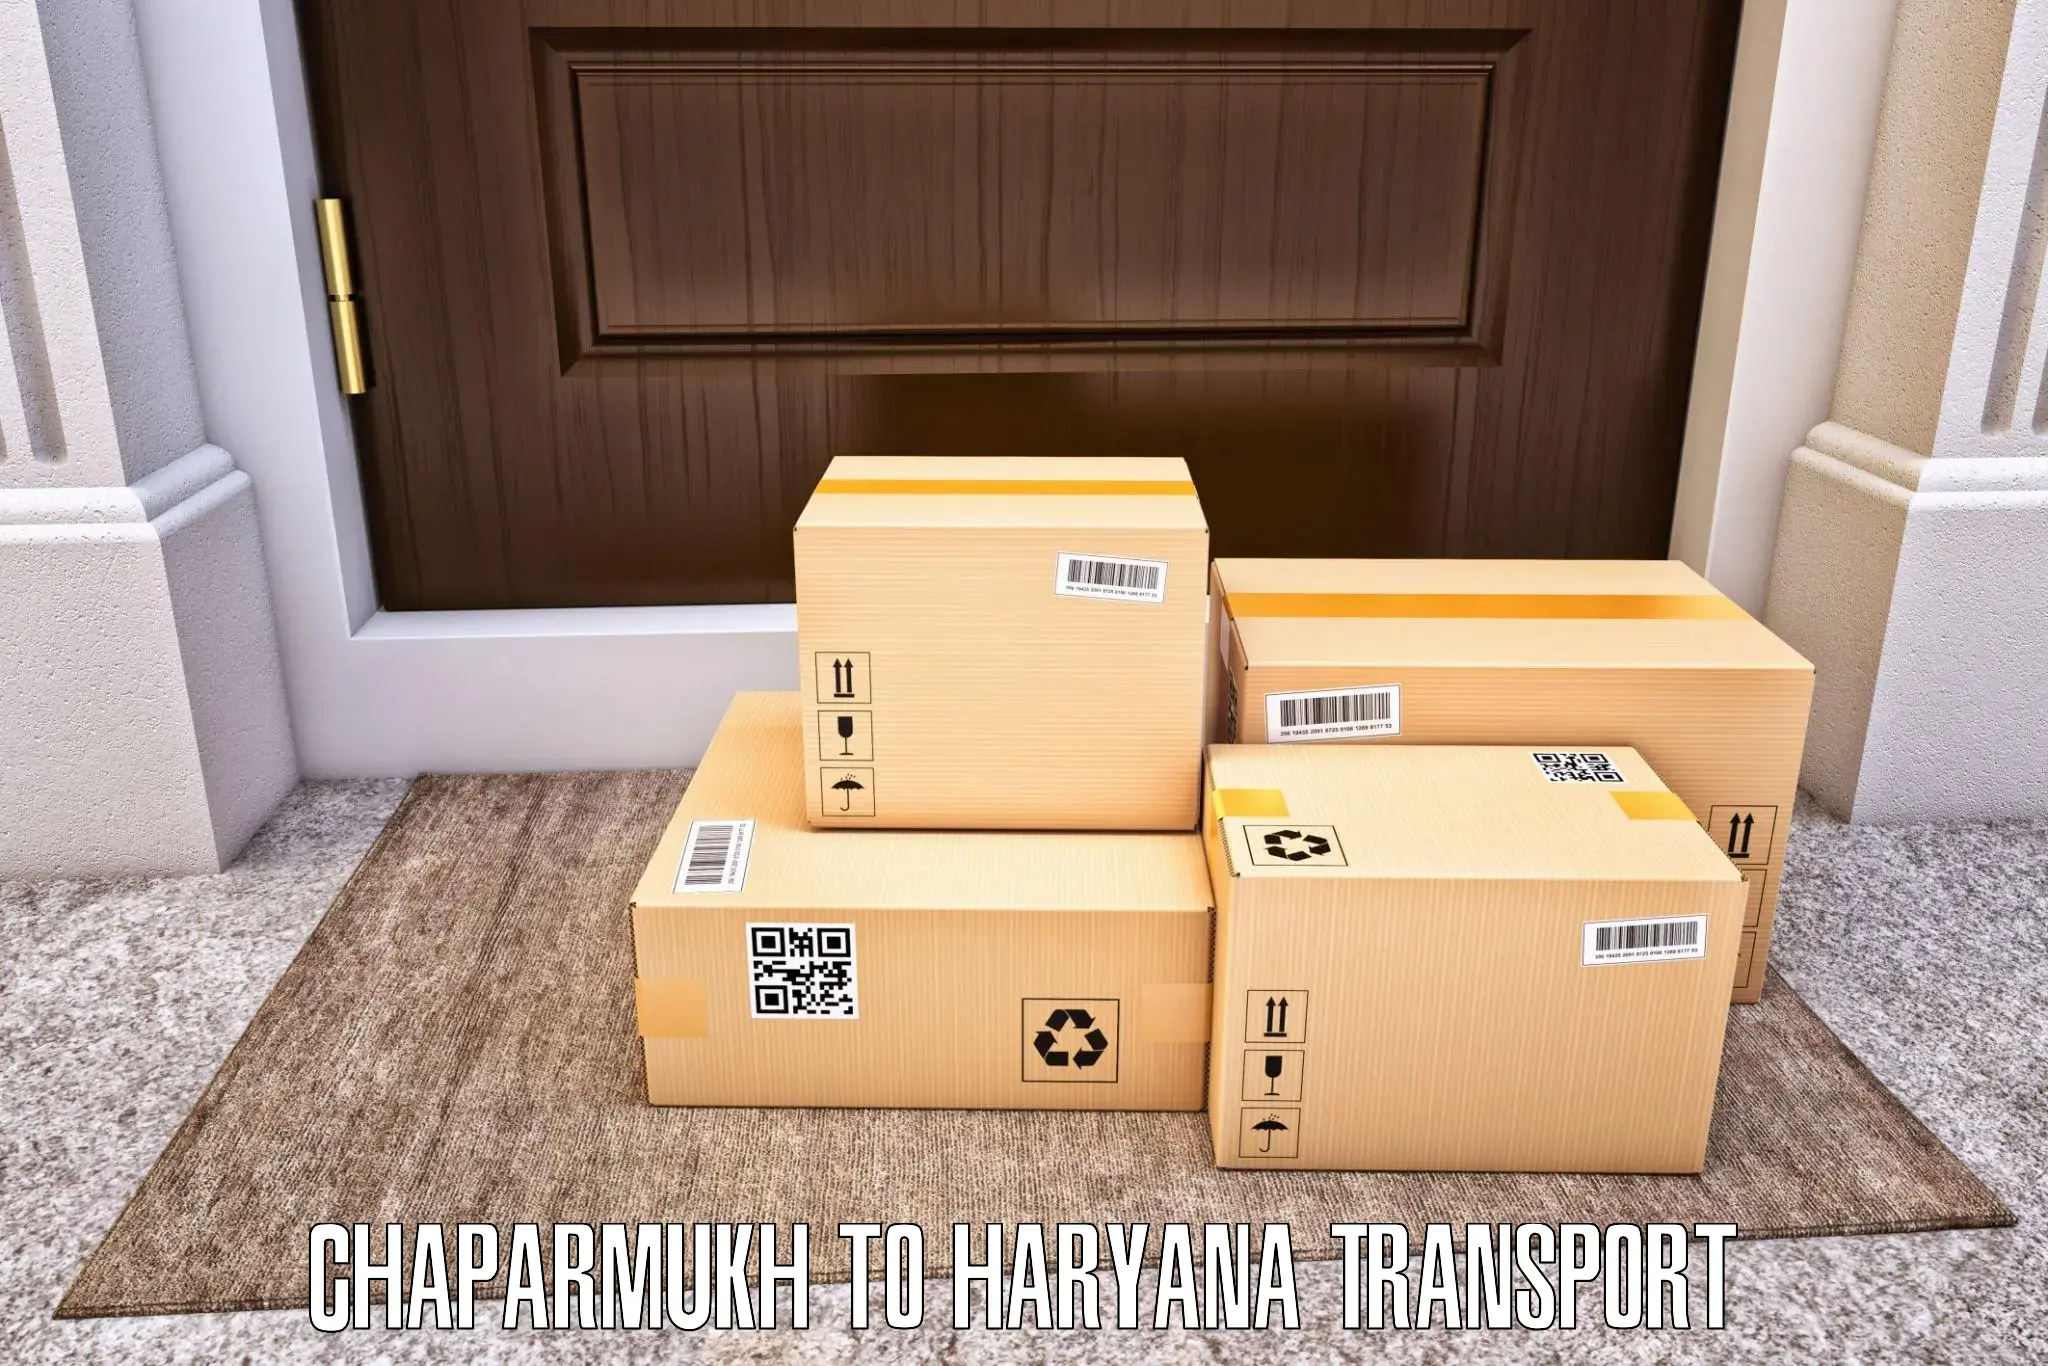 Domestic goods transportation services Chaparmukh to Loharu